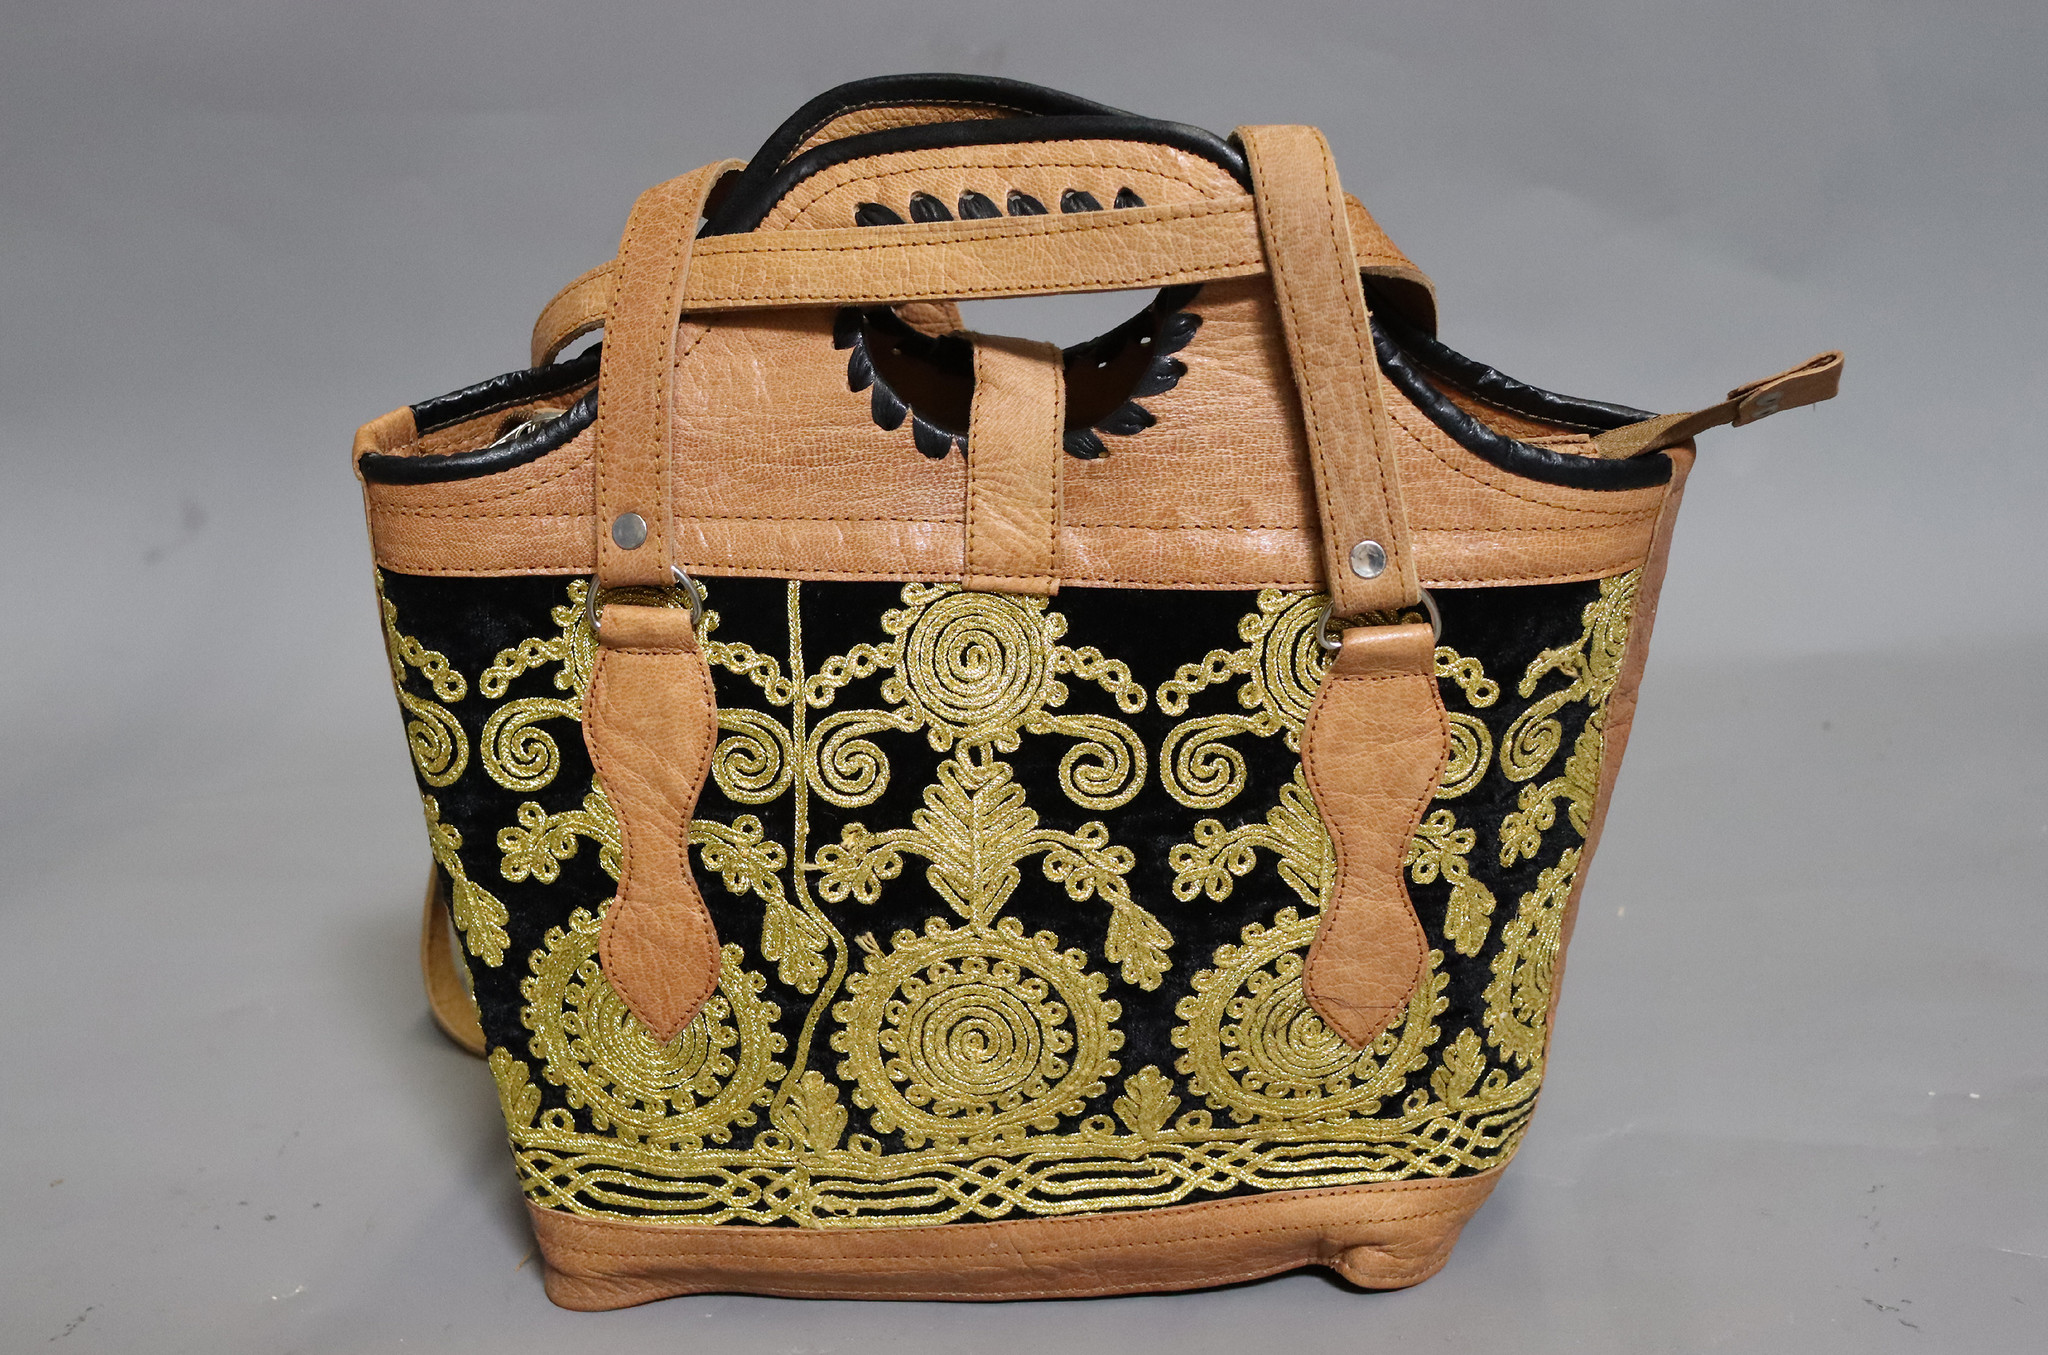 Rare Handmade Leather and Suzani Women's Shoulder Bag handbag shopper from Kabul Afghanistan No:23-5